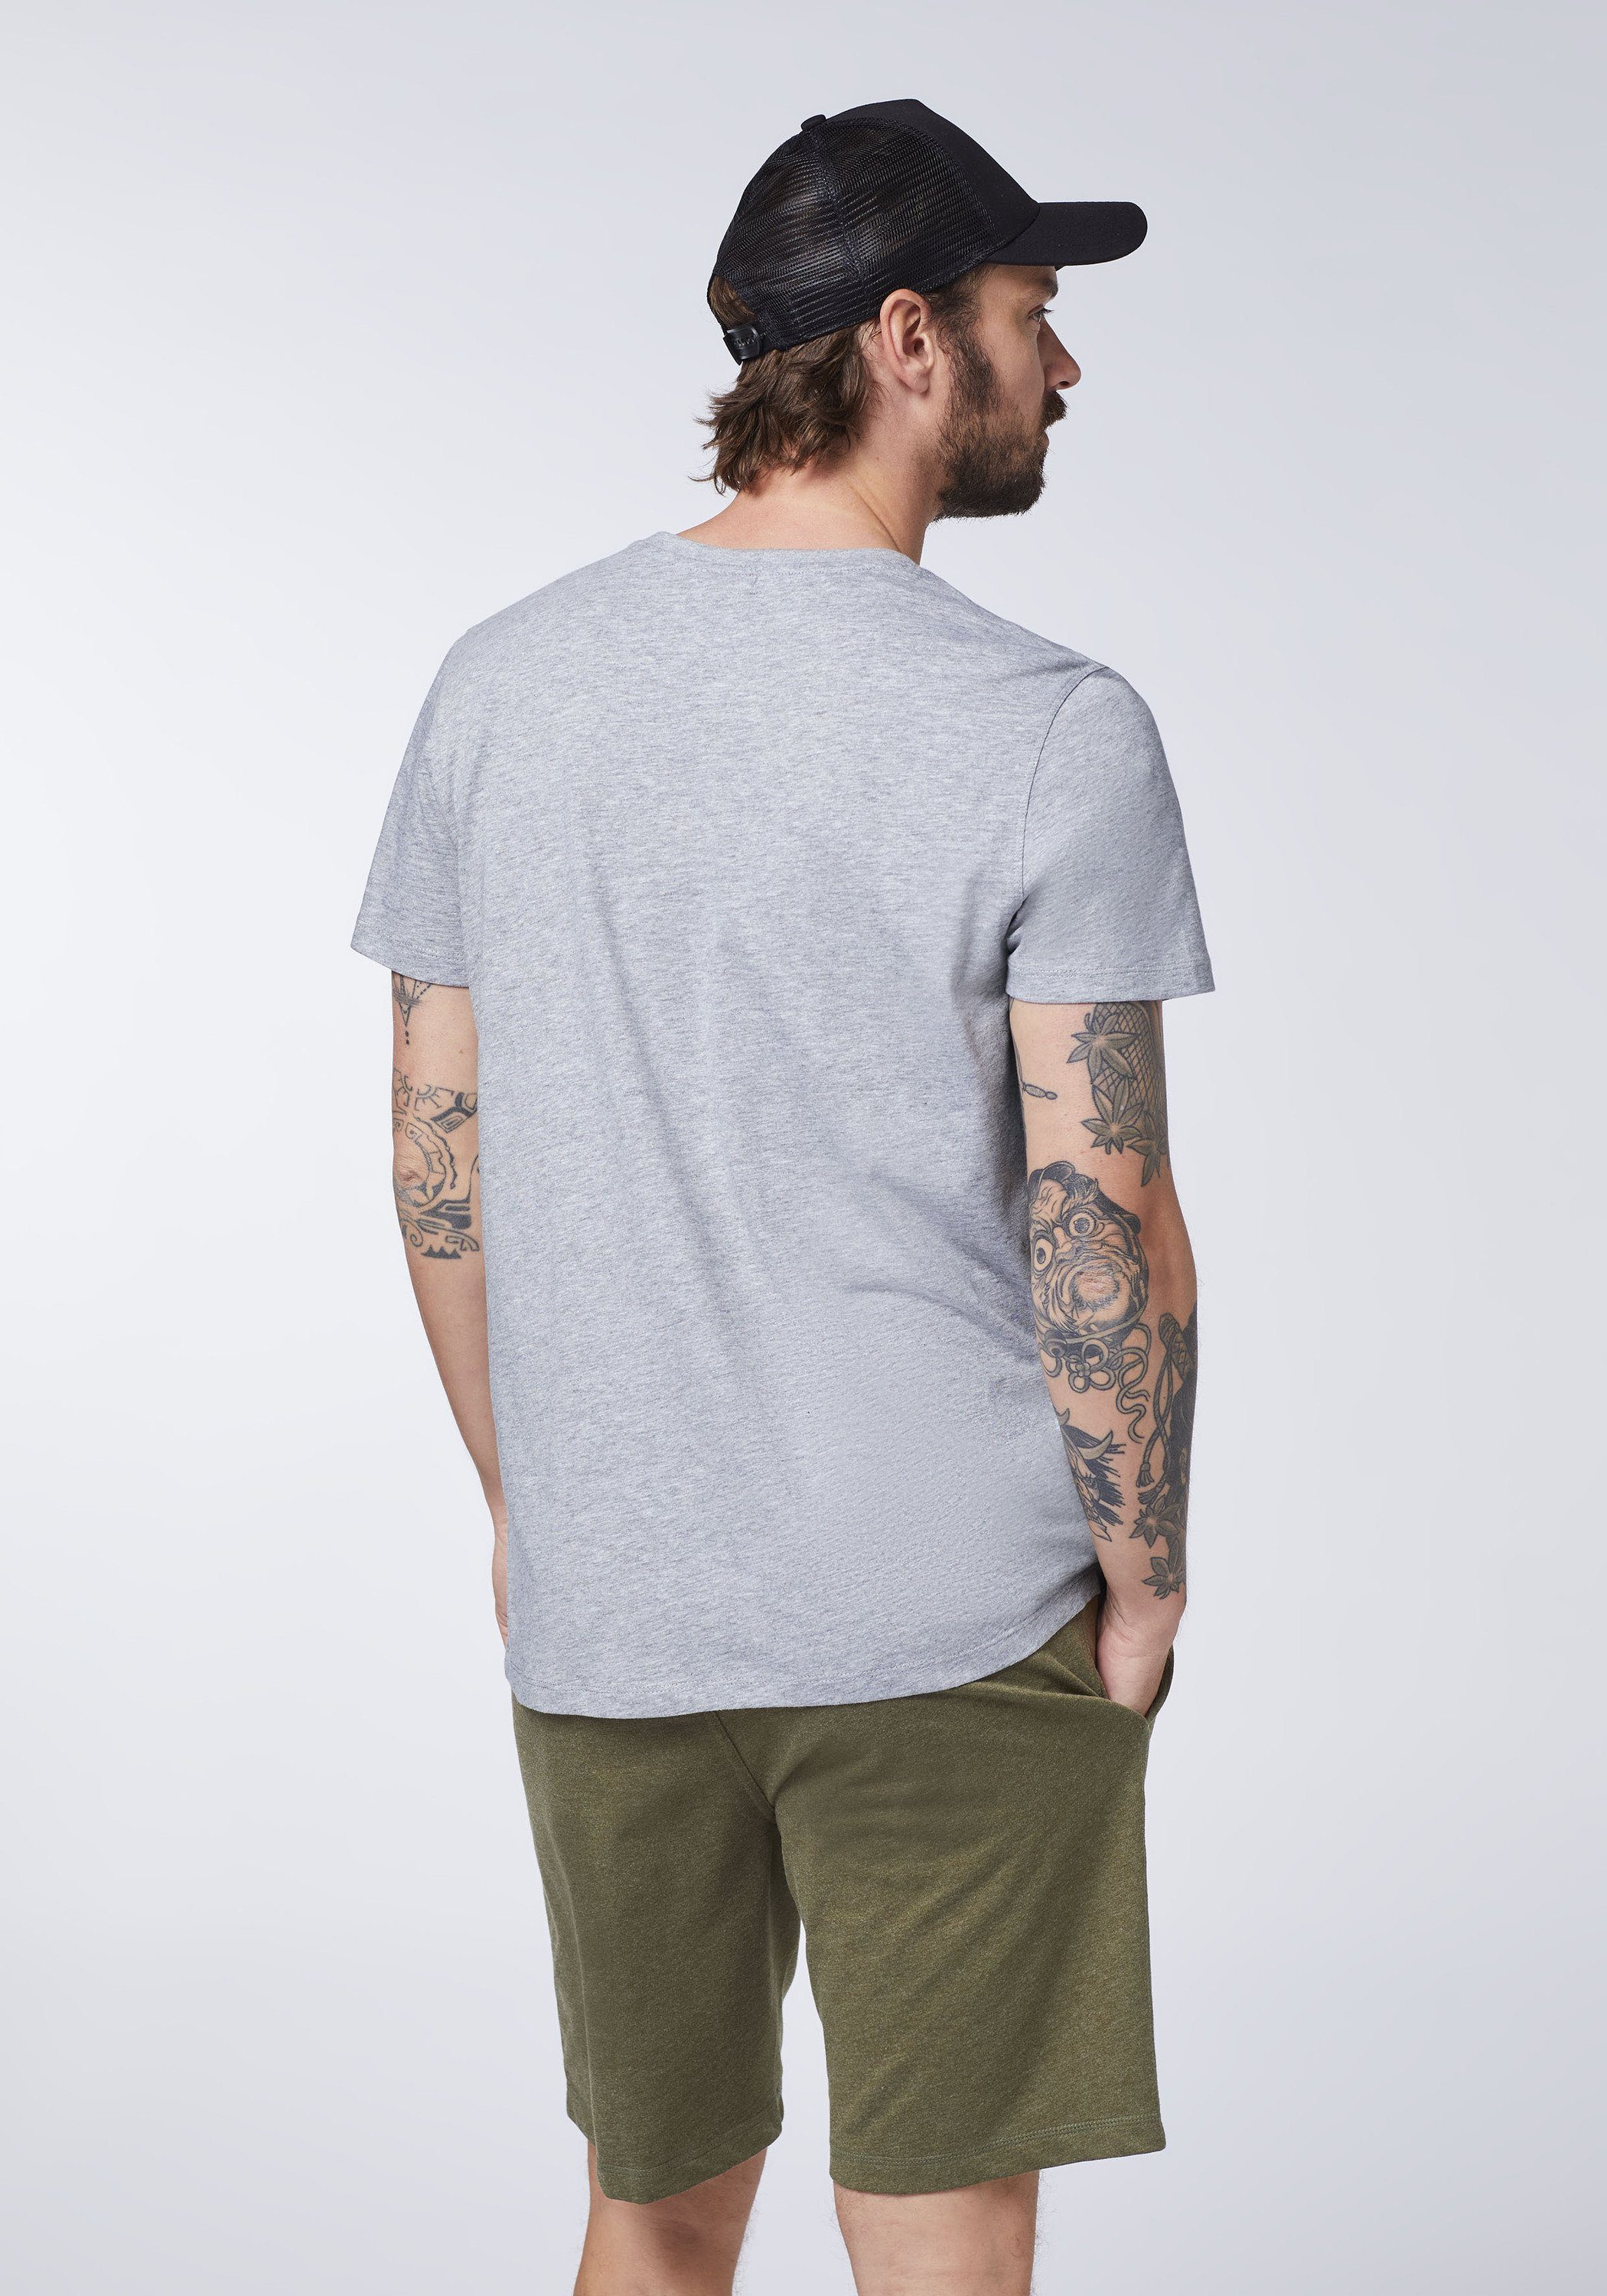 Uncle Sam Grey 1 Single-Jersey Mid aus Melange Grey Mid Melange Print-Shirt soften